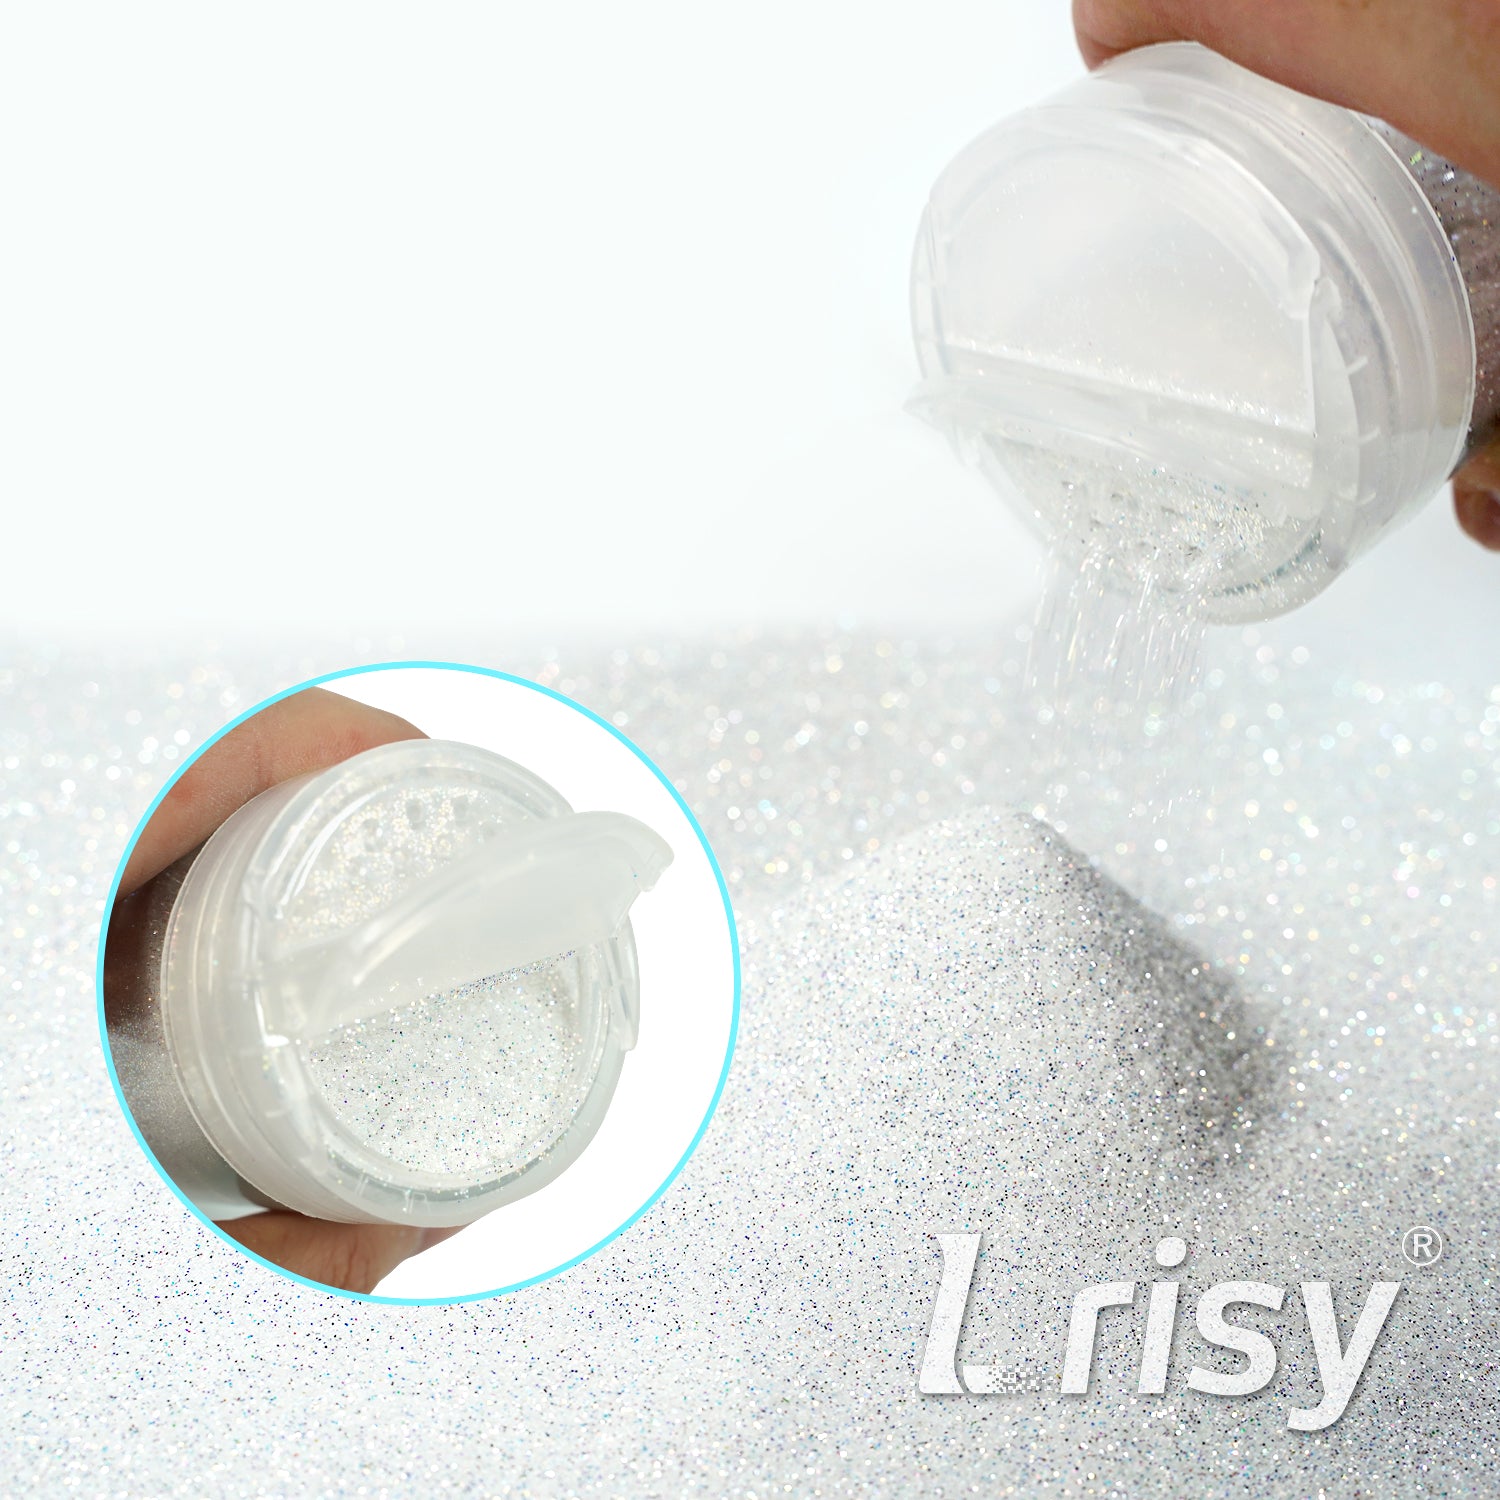 Lrisy Iridescent High Brightness Extra Fine Glitter Powder with Shaker Lid140g/4.5oz (Ultra Thin Diamond Mirror Silver)